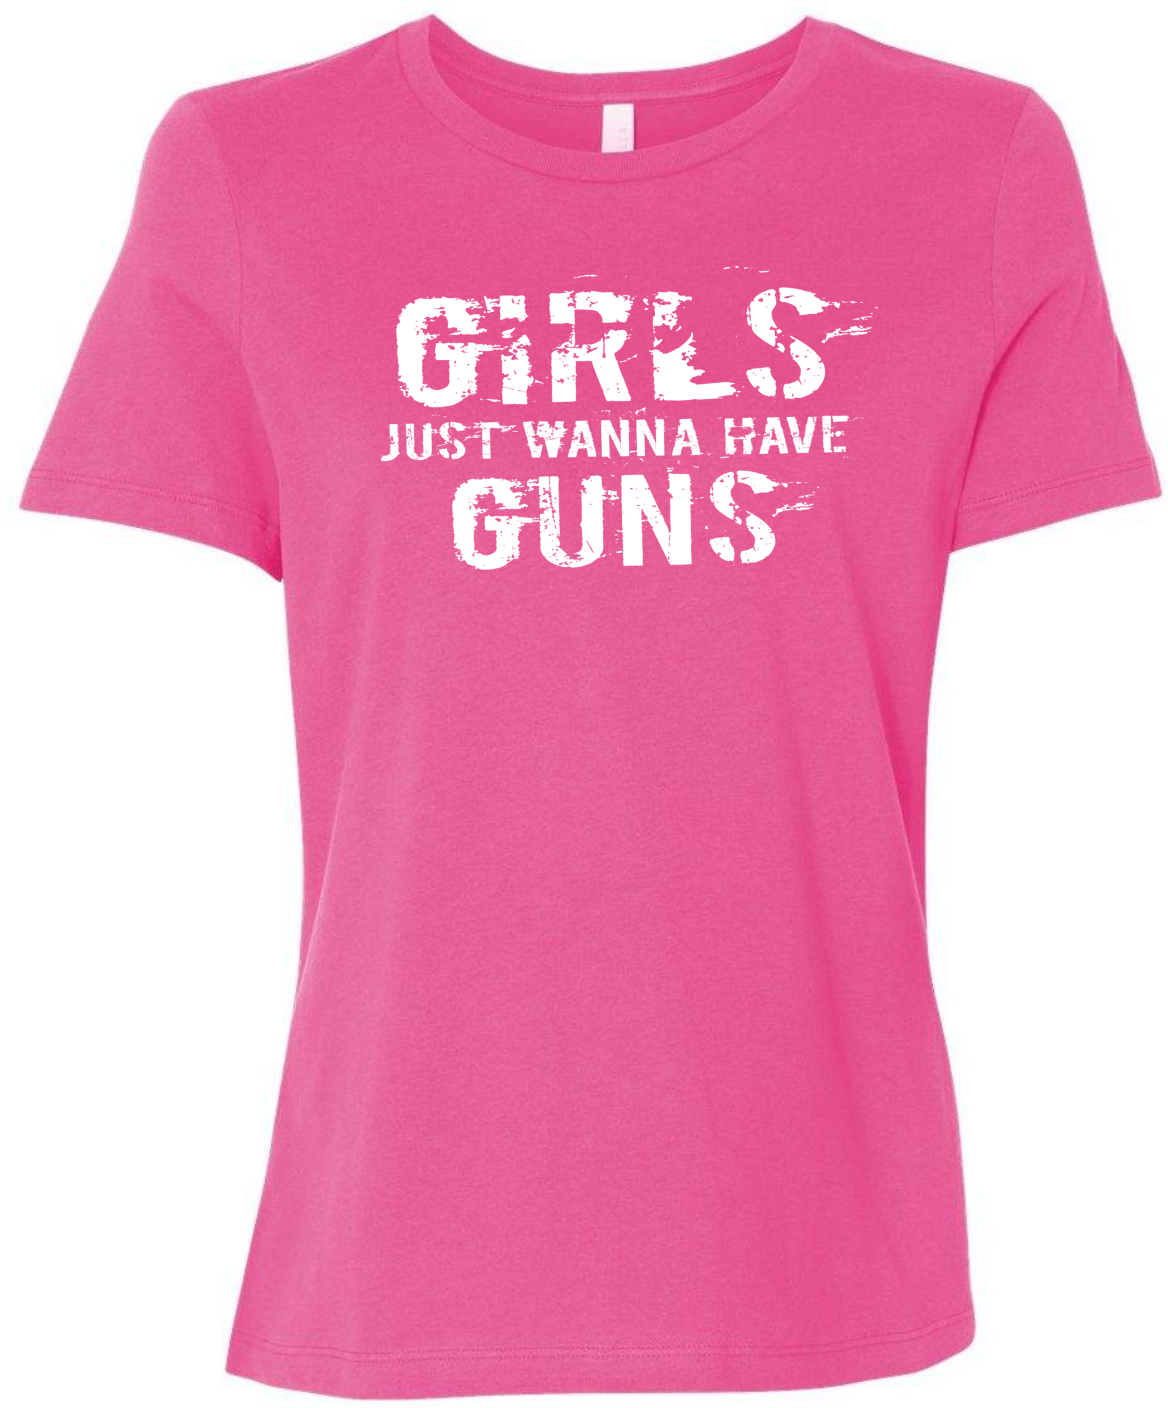 Girls just wanna have guns 